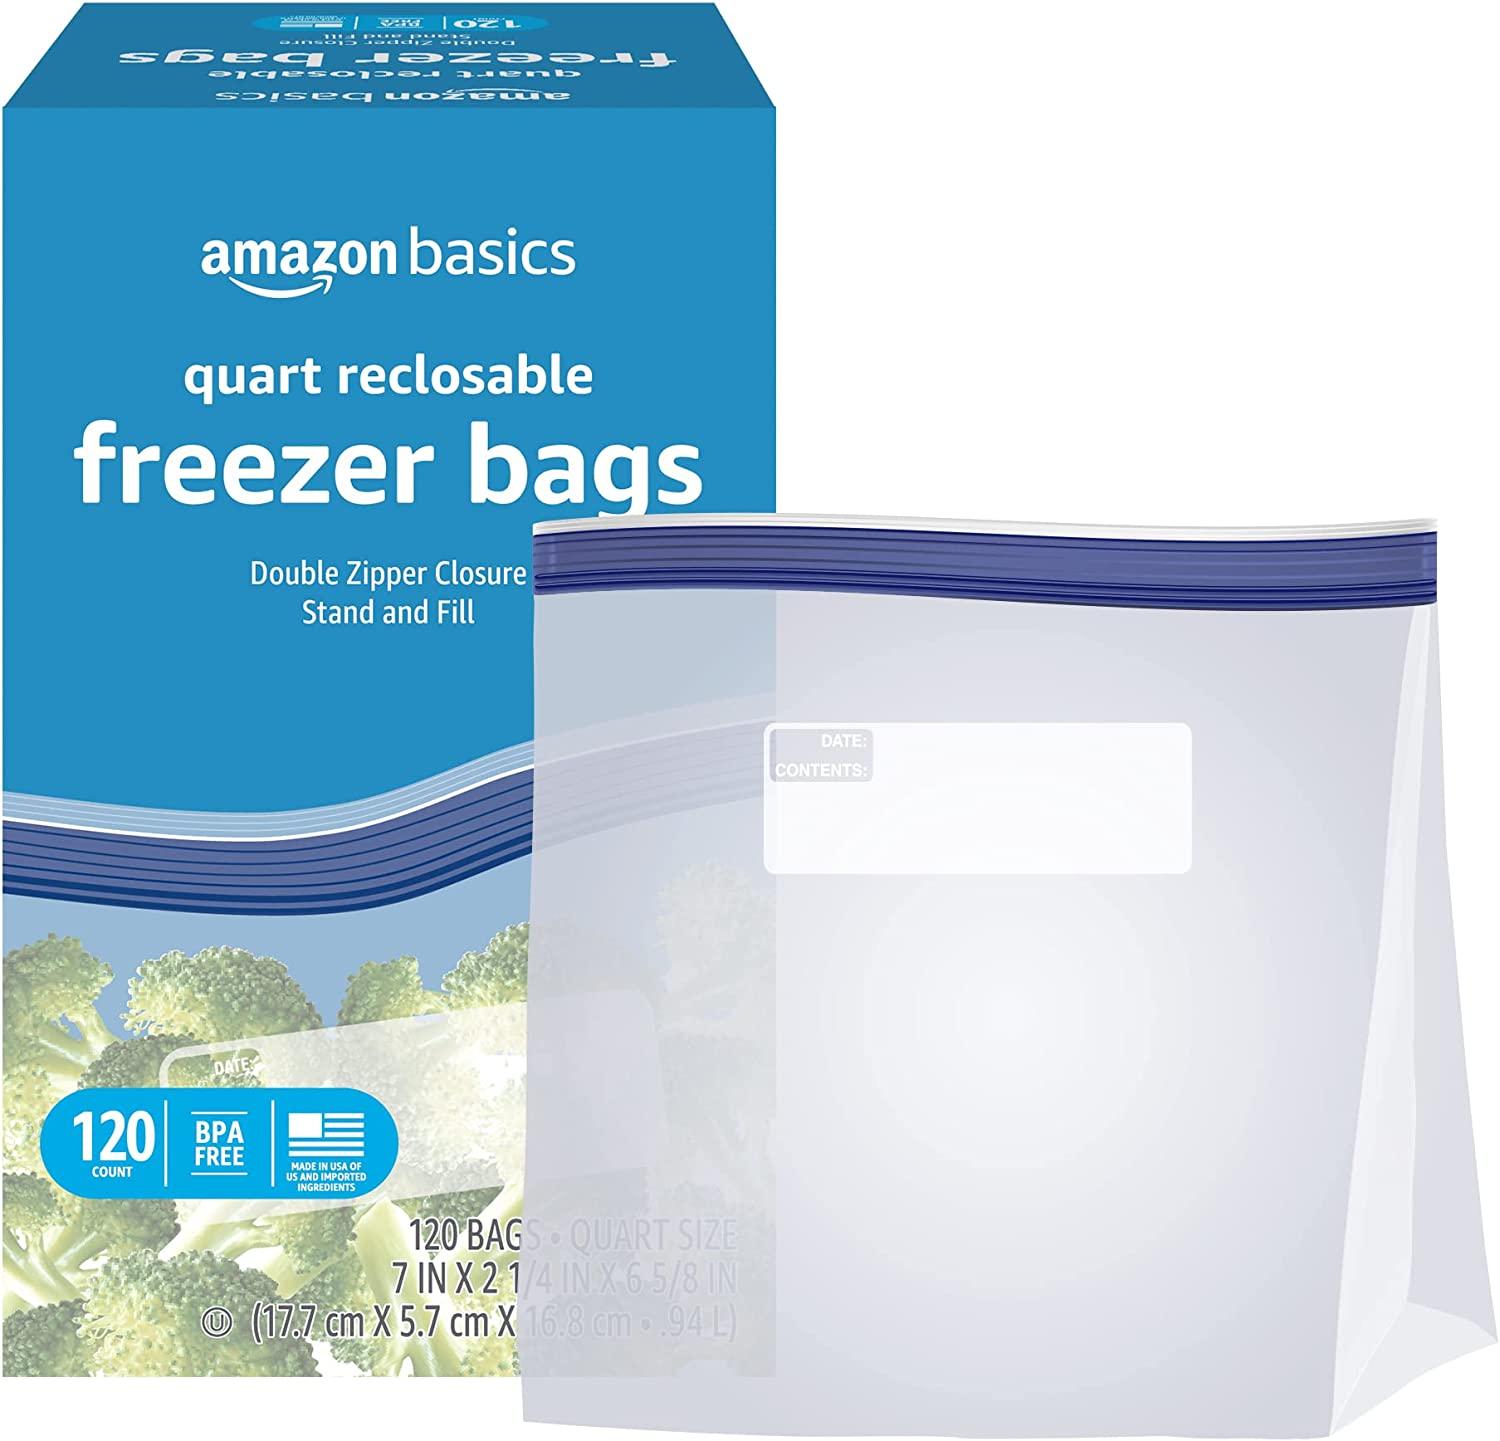 Amazon Basics Freezer Quart Bags 120 Pack for $5.12 Shipped